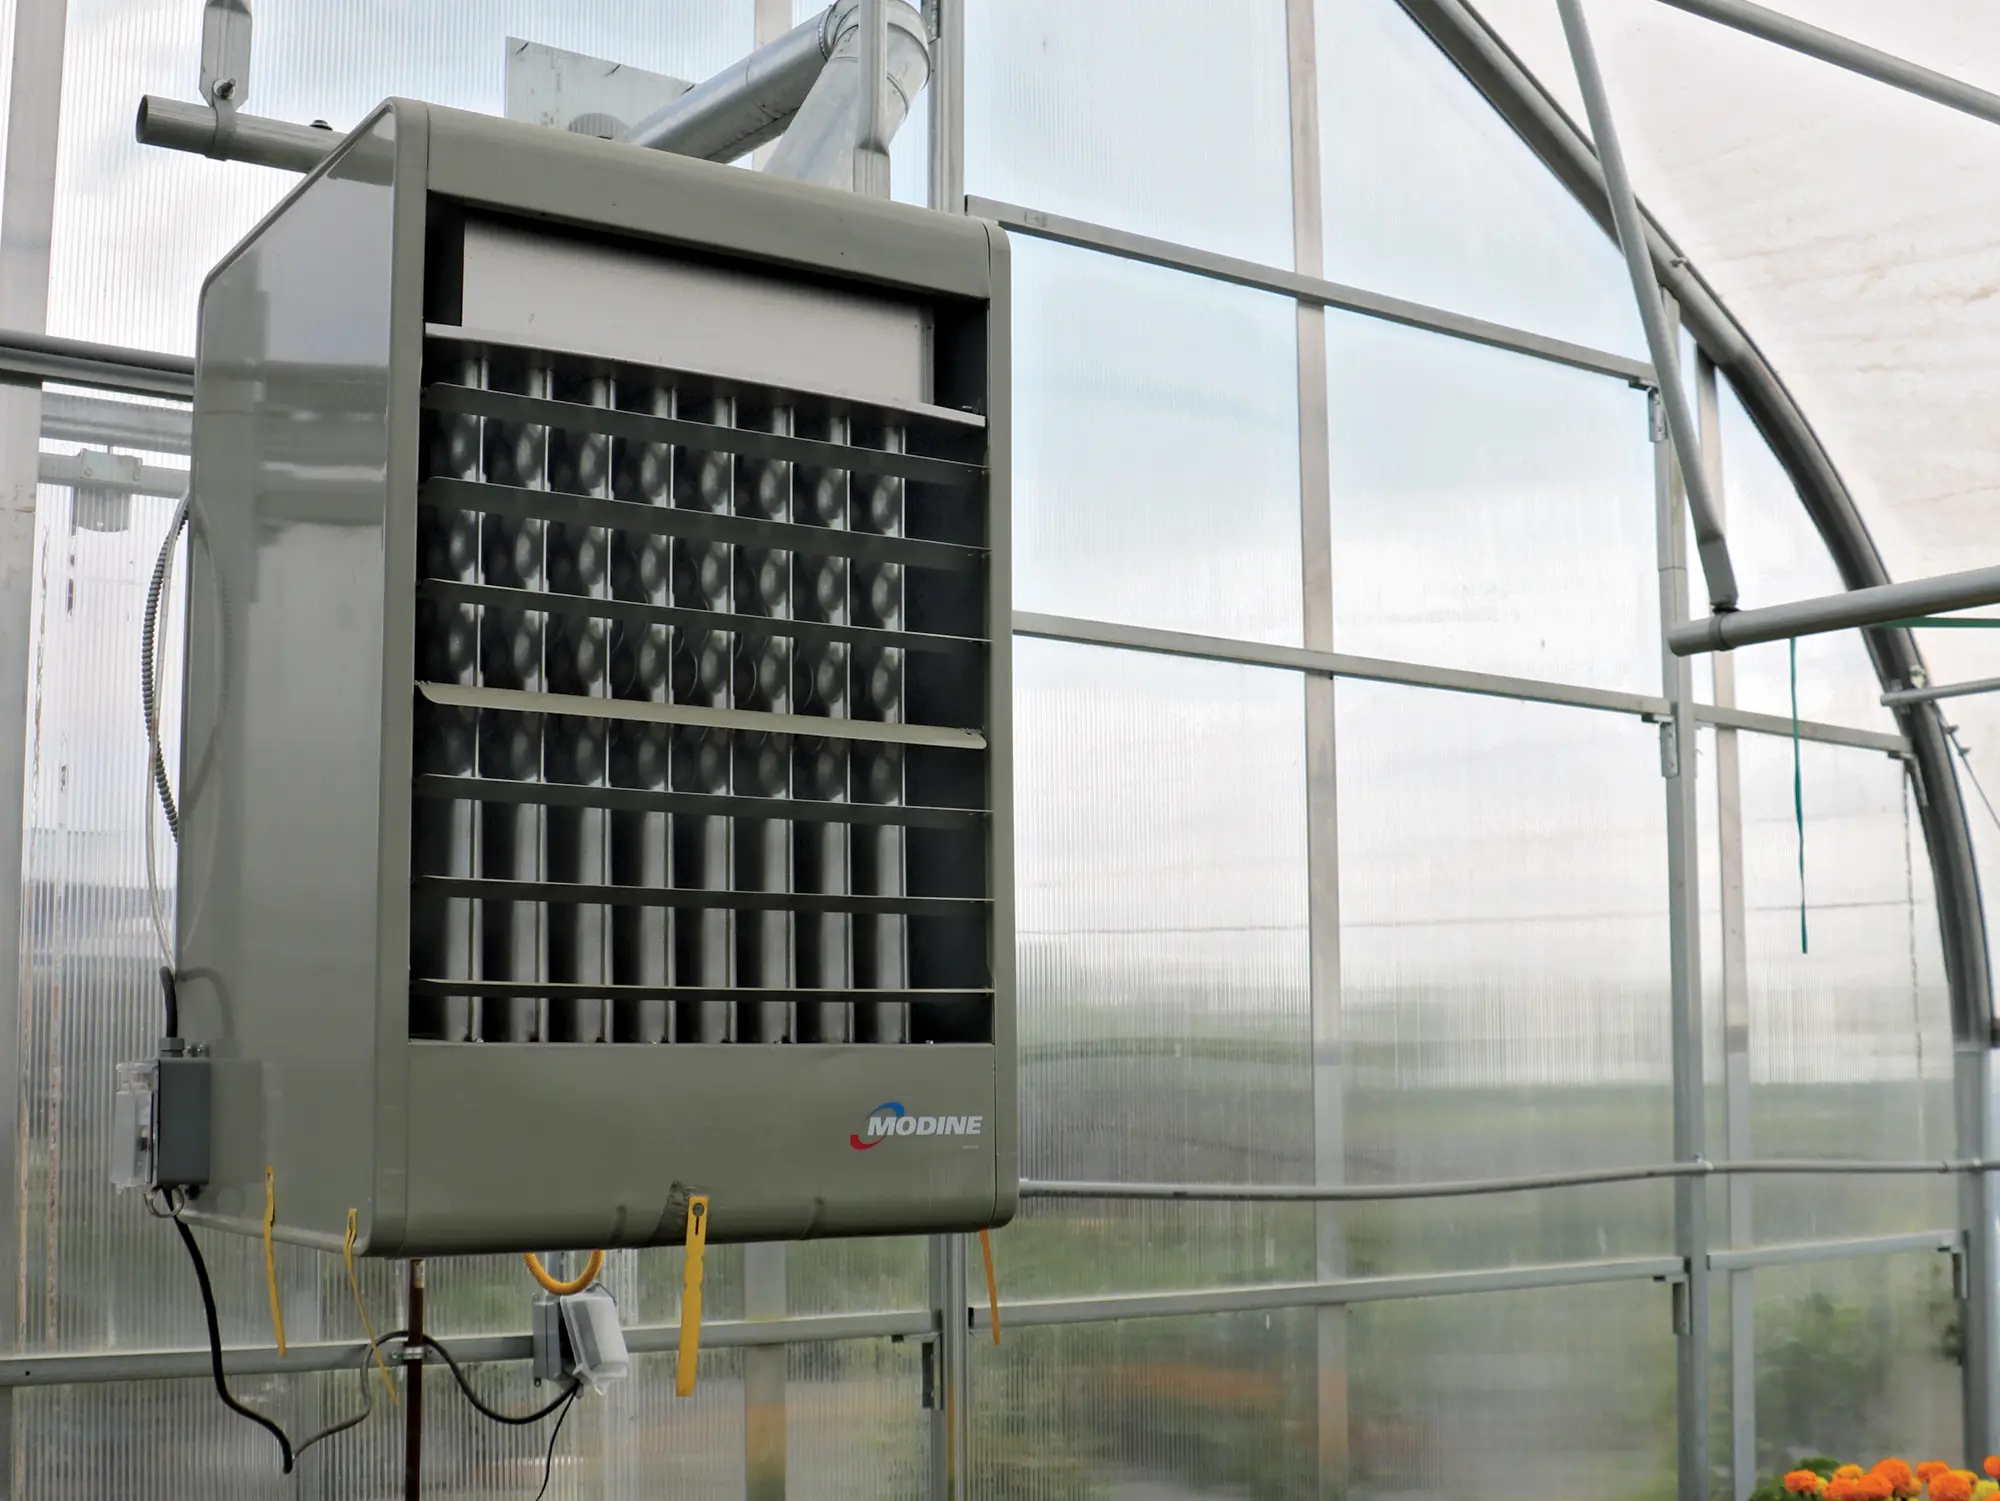 modine heater operating inside year-round greenhouse